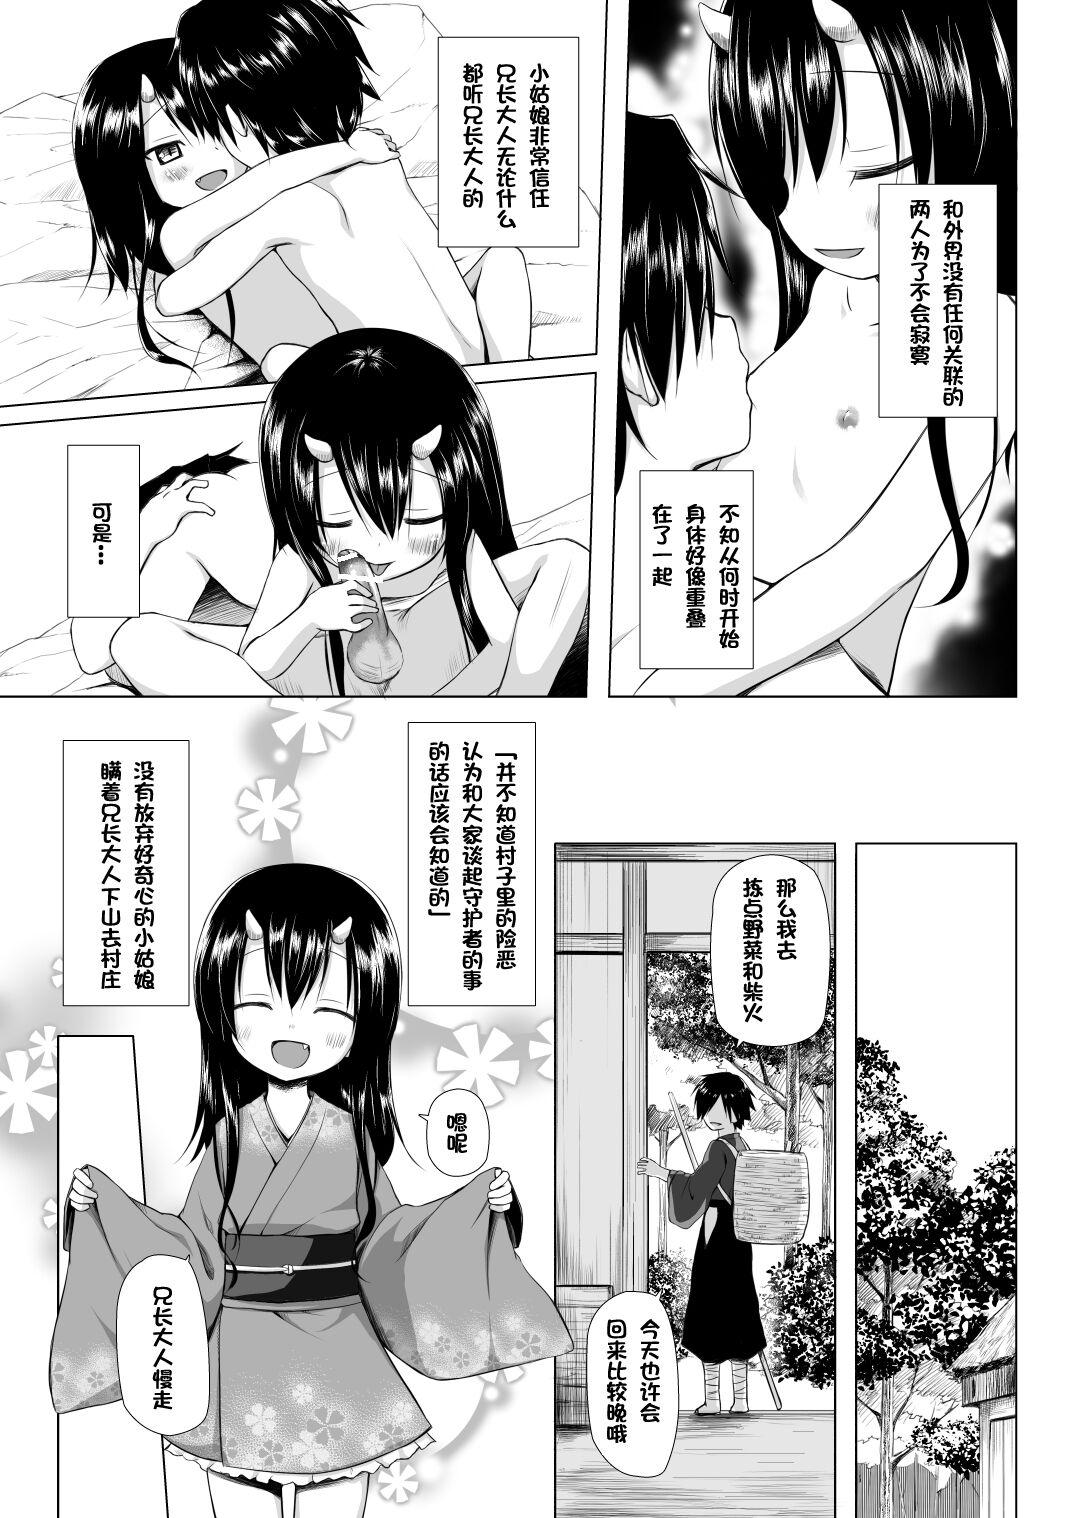 Submissive Monokemono San-ya - Original Sensual - Page 4